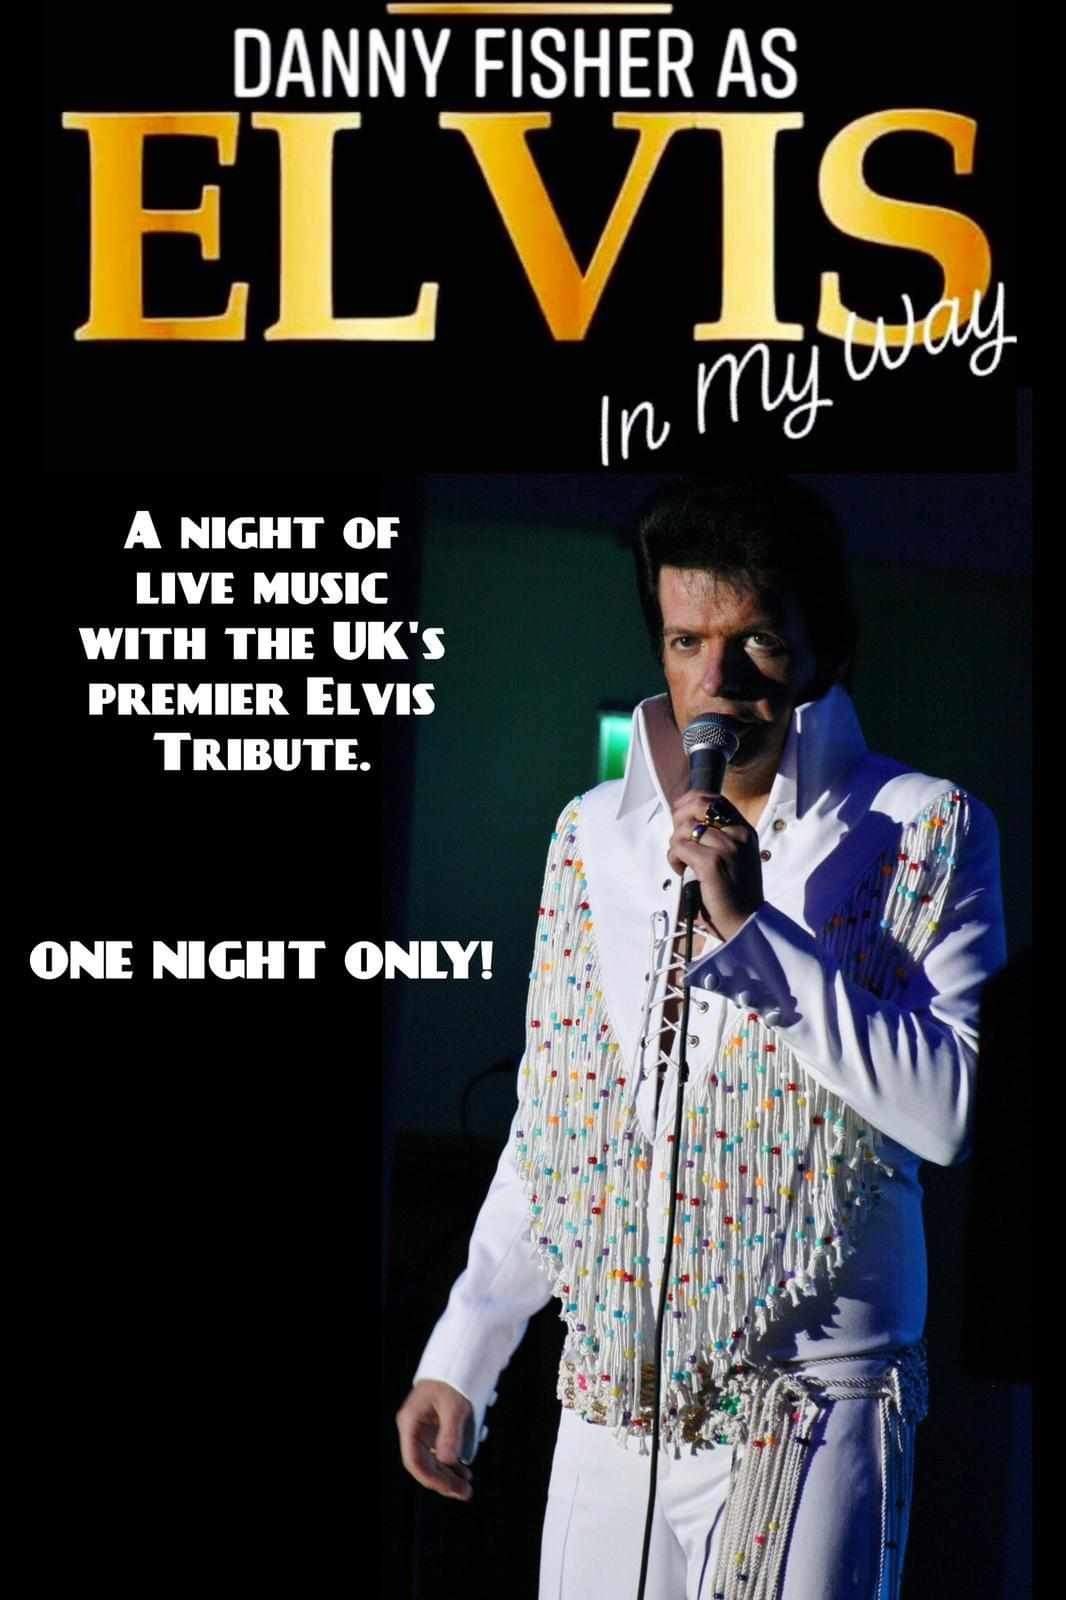 One night with Elvis  on jun. 15, 19:30@Benwick village hall - Compra entradas y obtén información enwhittlesey music nights 